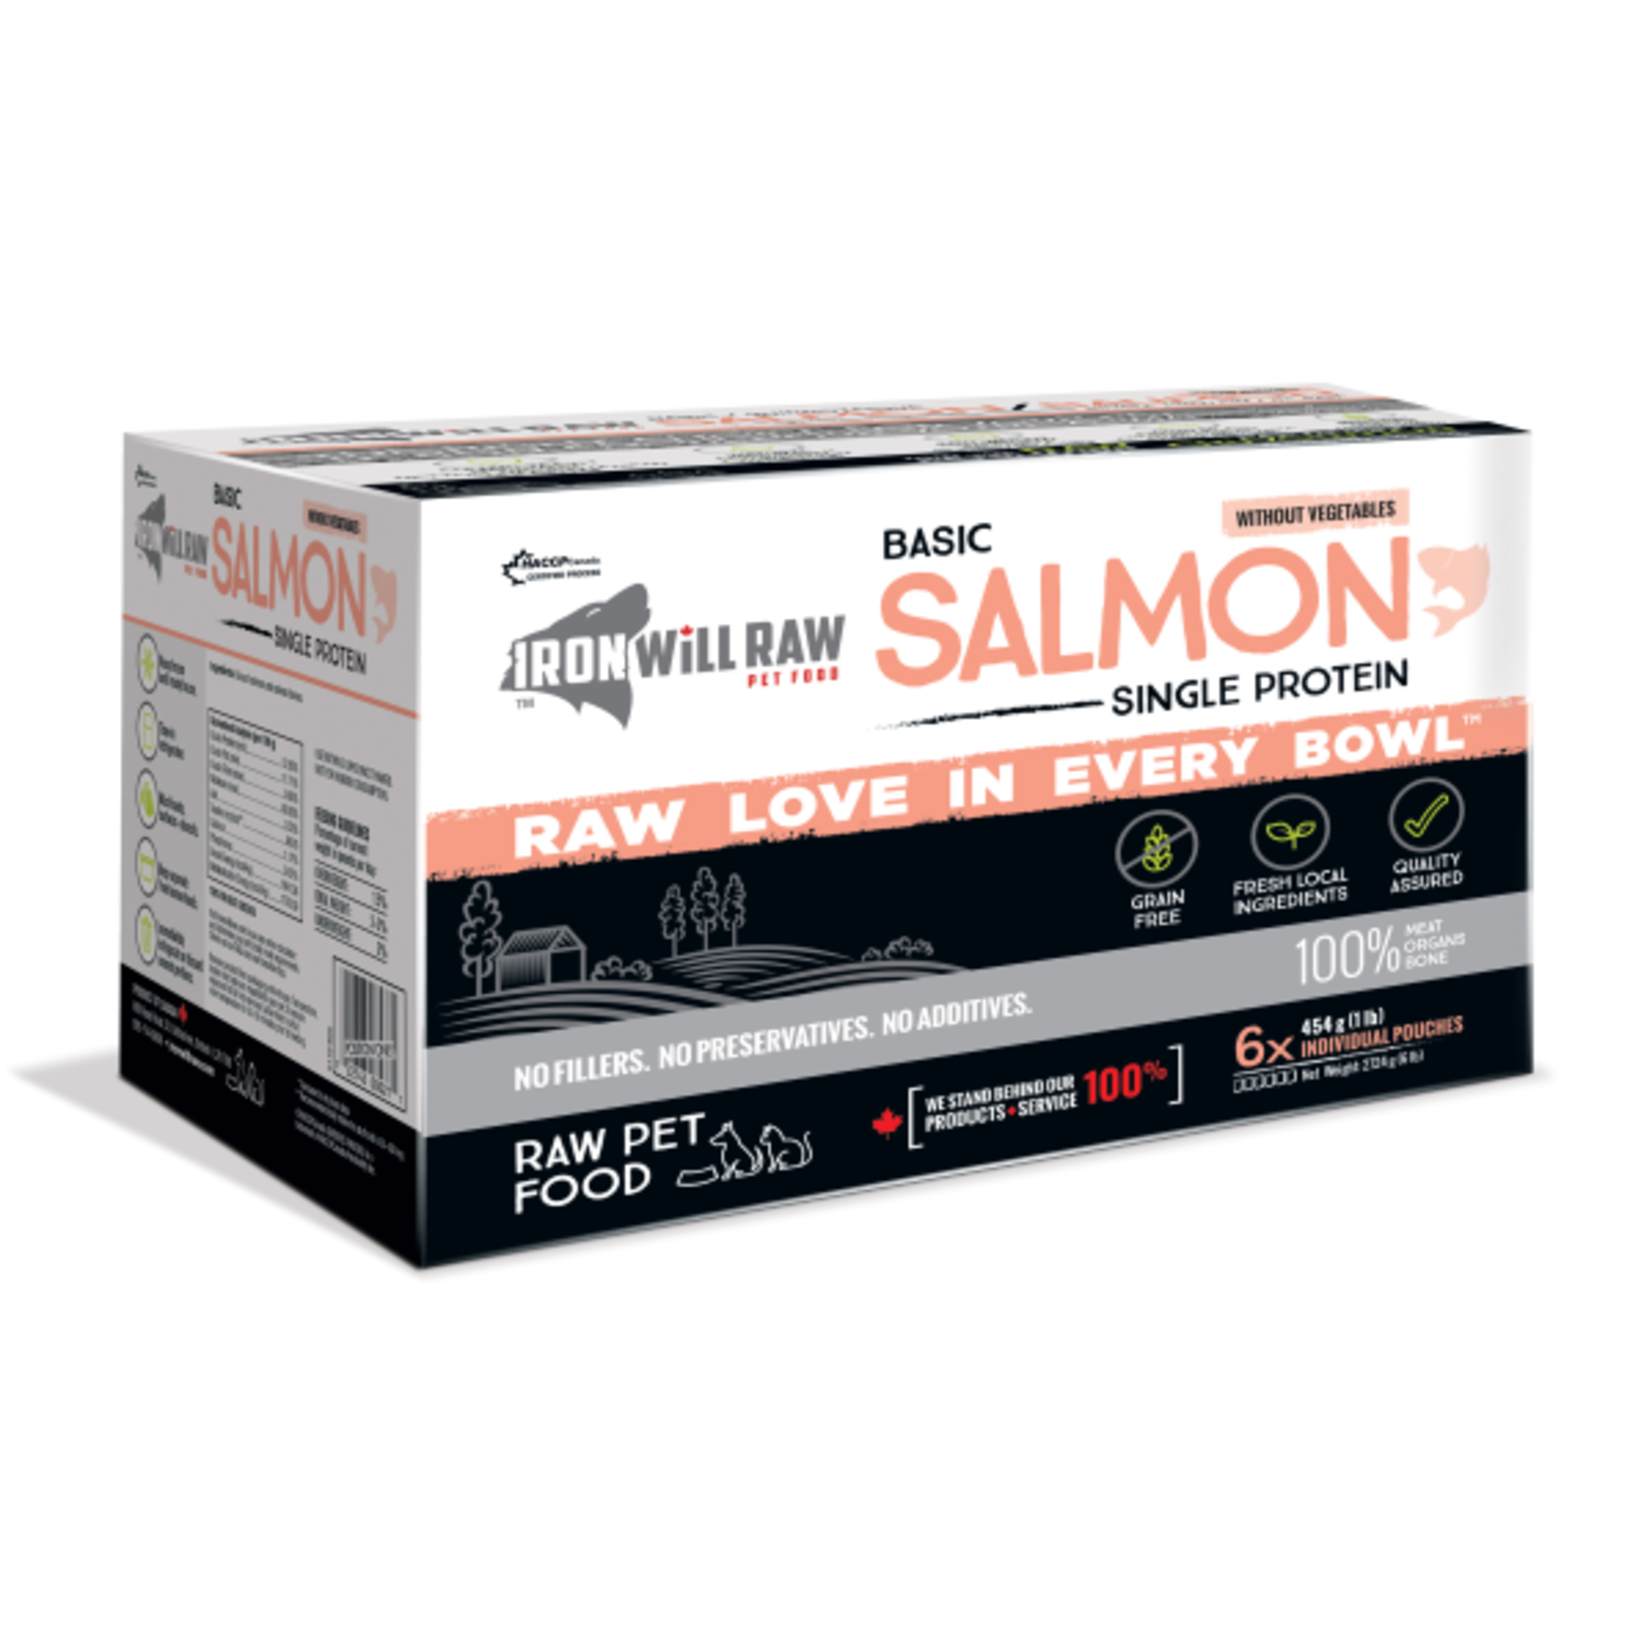 IRON WILL RAW Iron Will Raw Dog GF Basic Salmon Single Protein 8x1/2 lb (8oz)